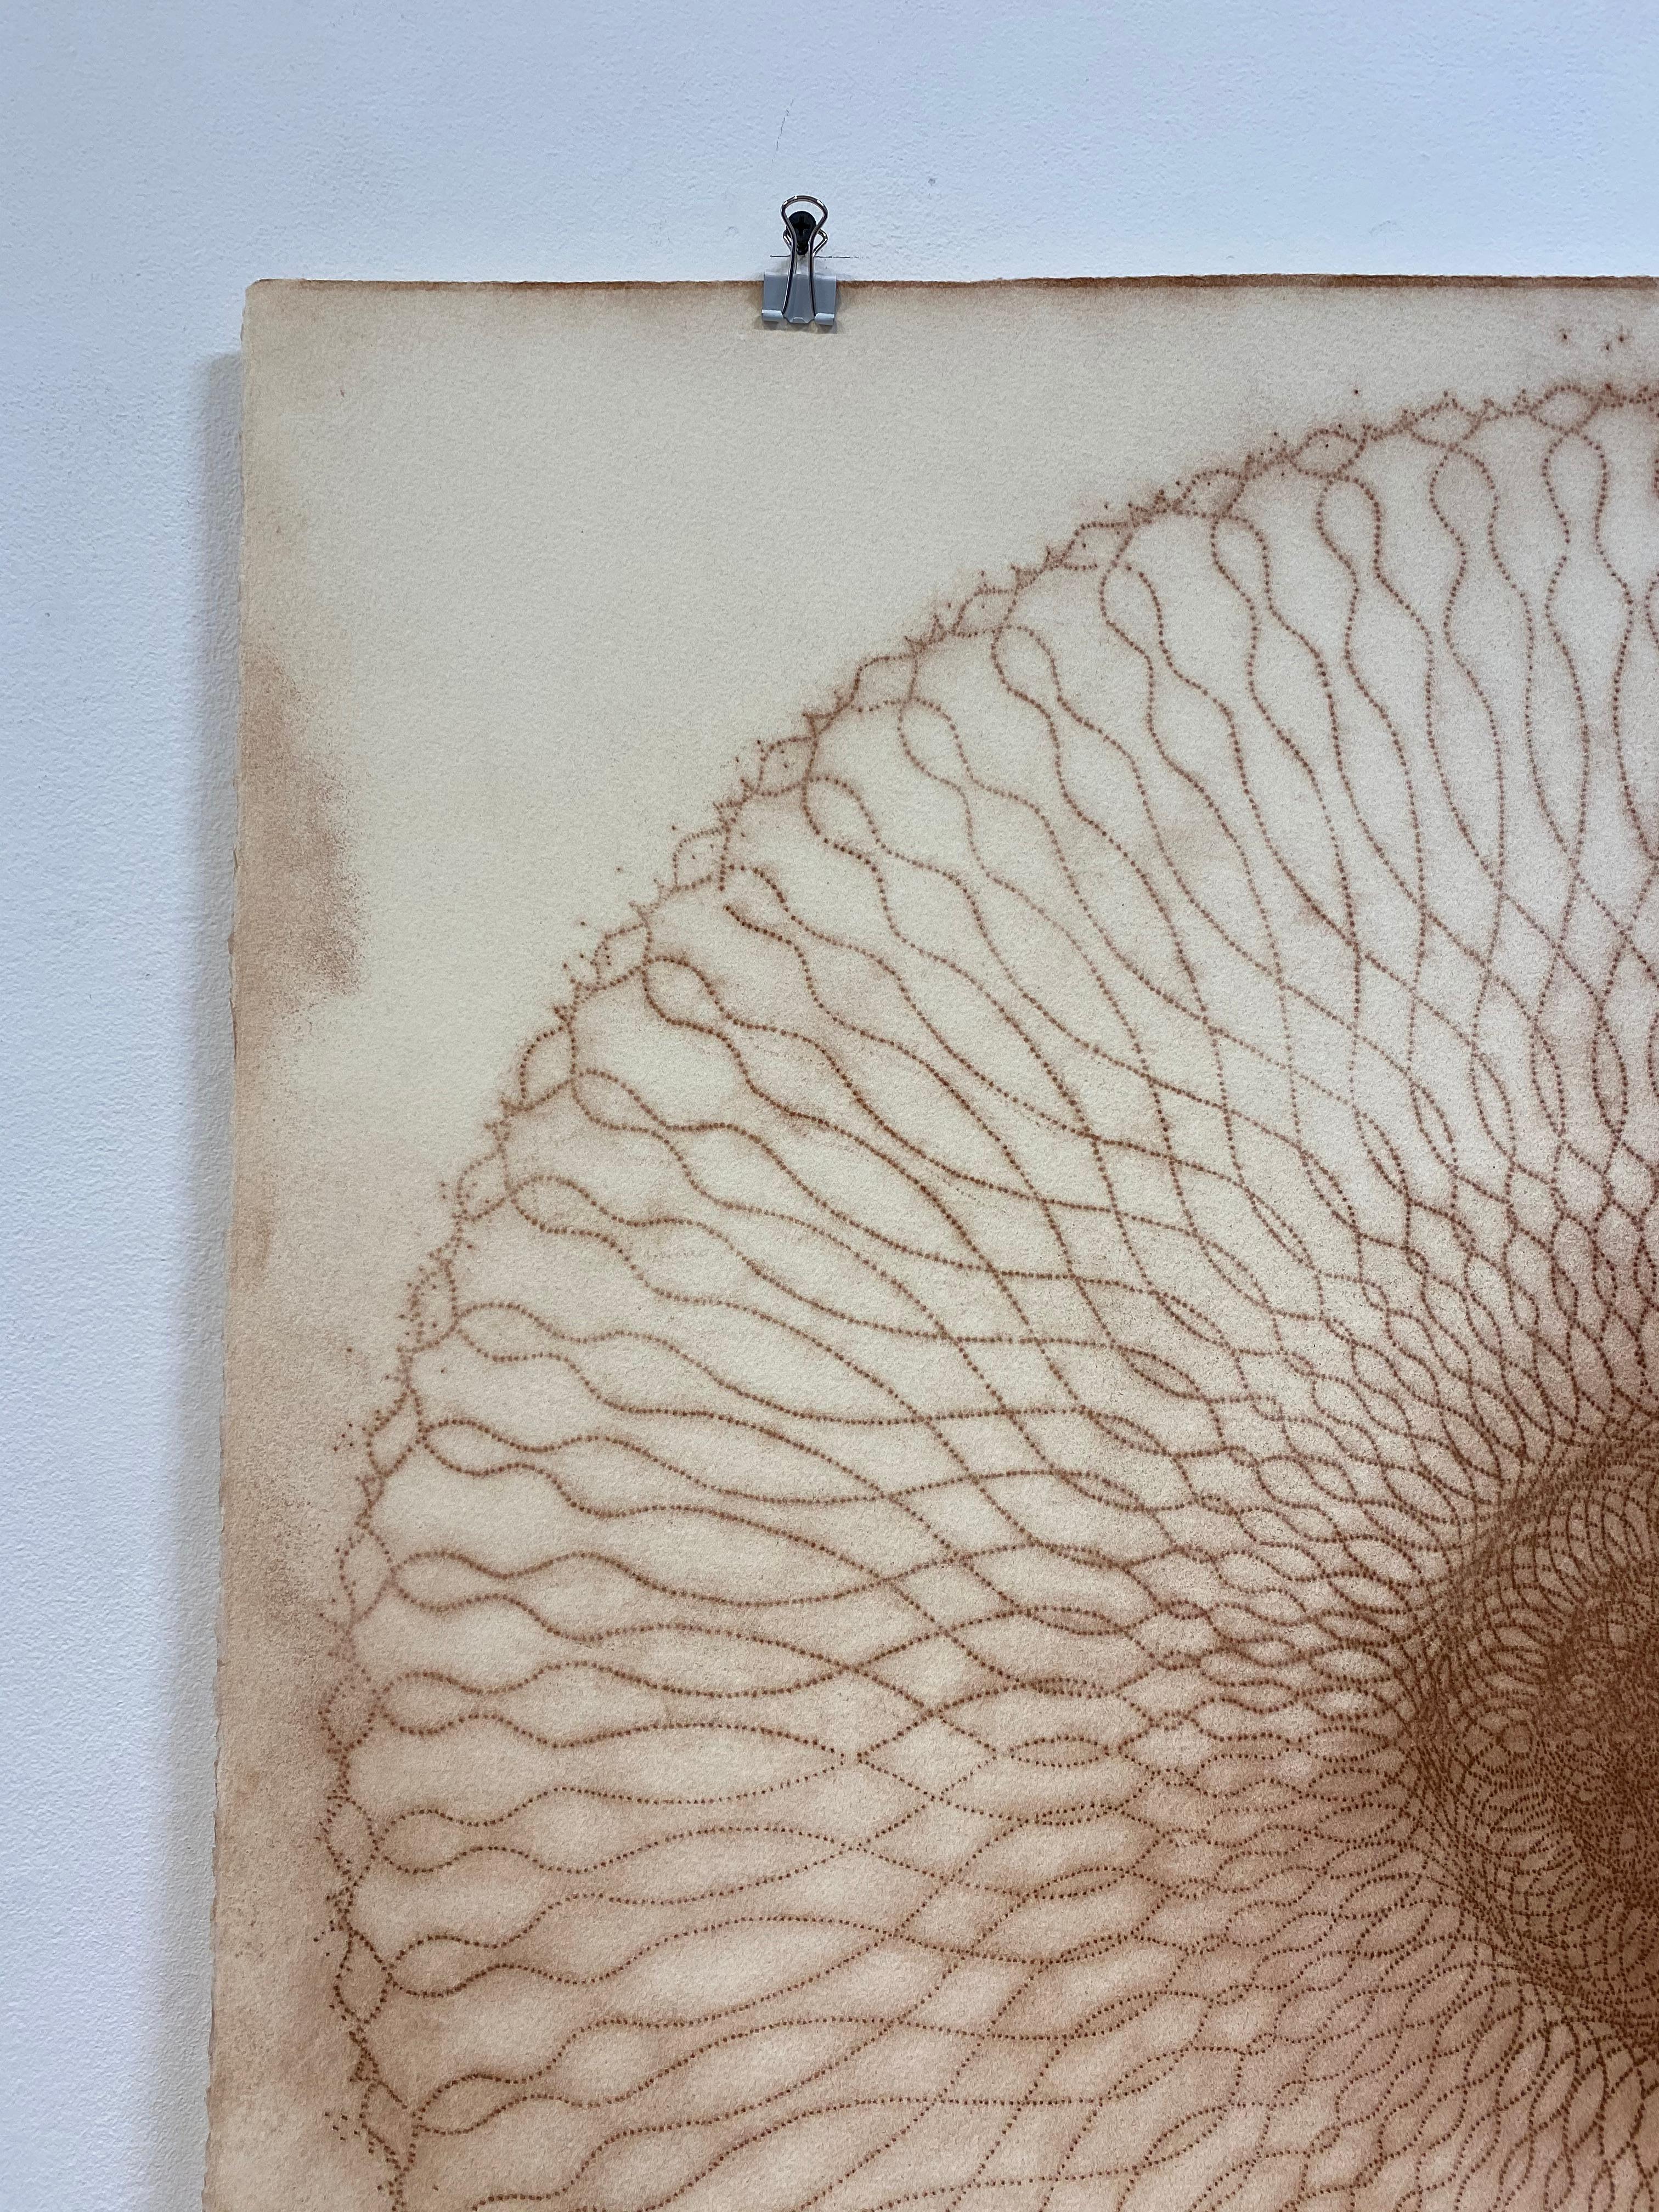 Exotic Hex Series 112 07, Square Reddish Brown Circular Mandala Line Drawing - Contemporary Art by Mary Judge